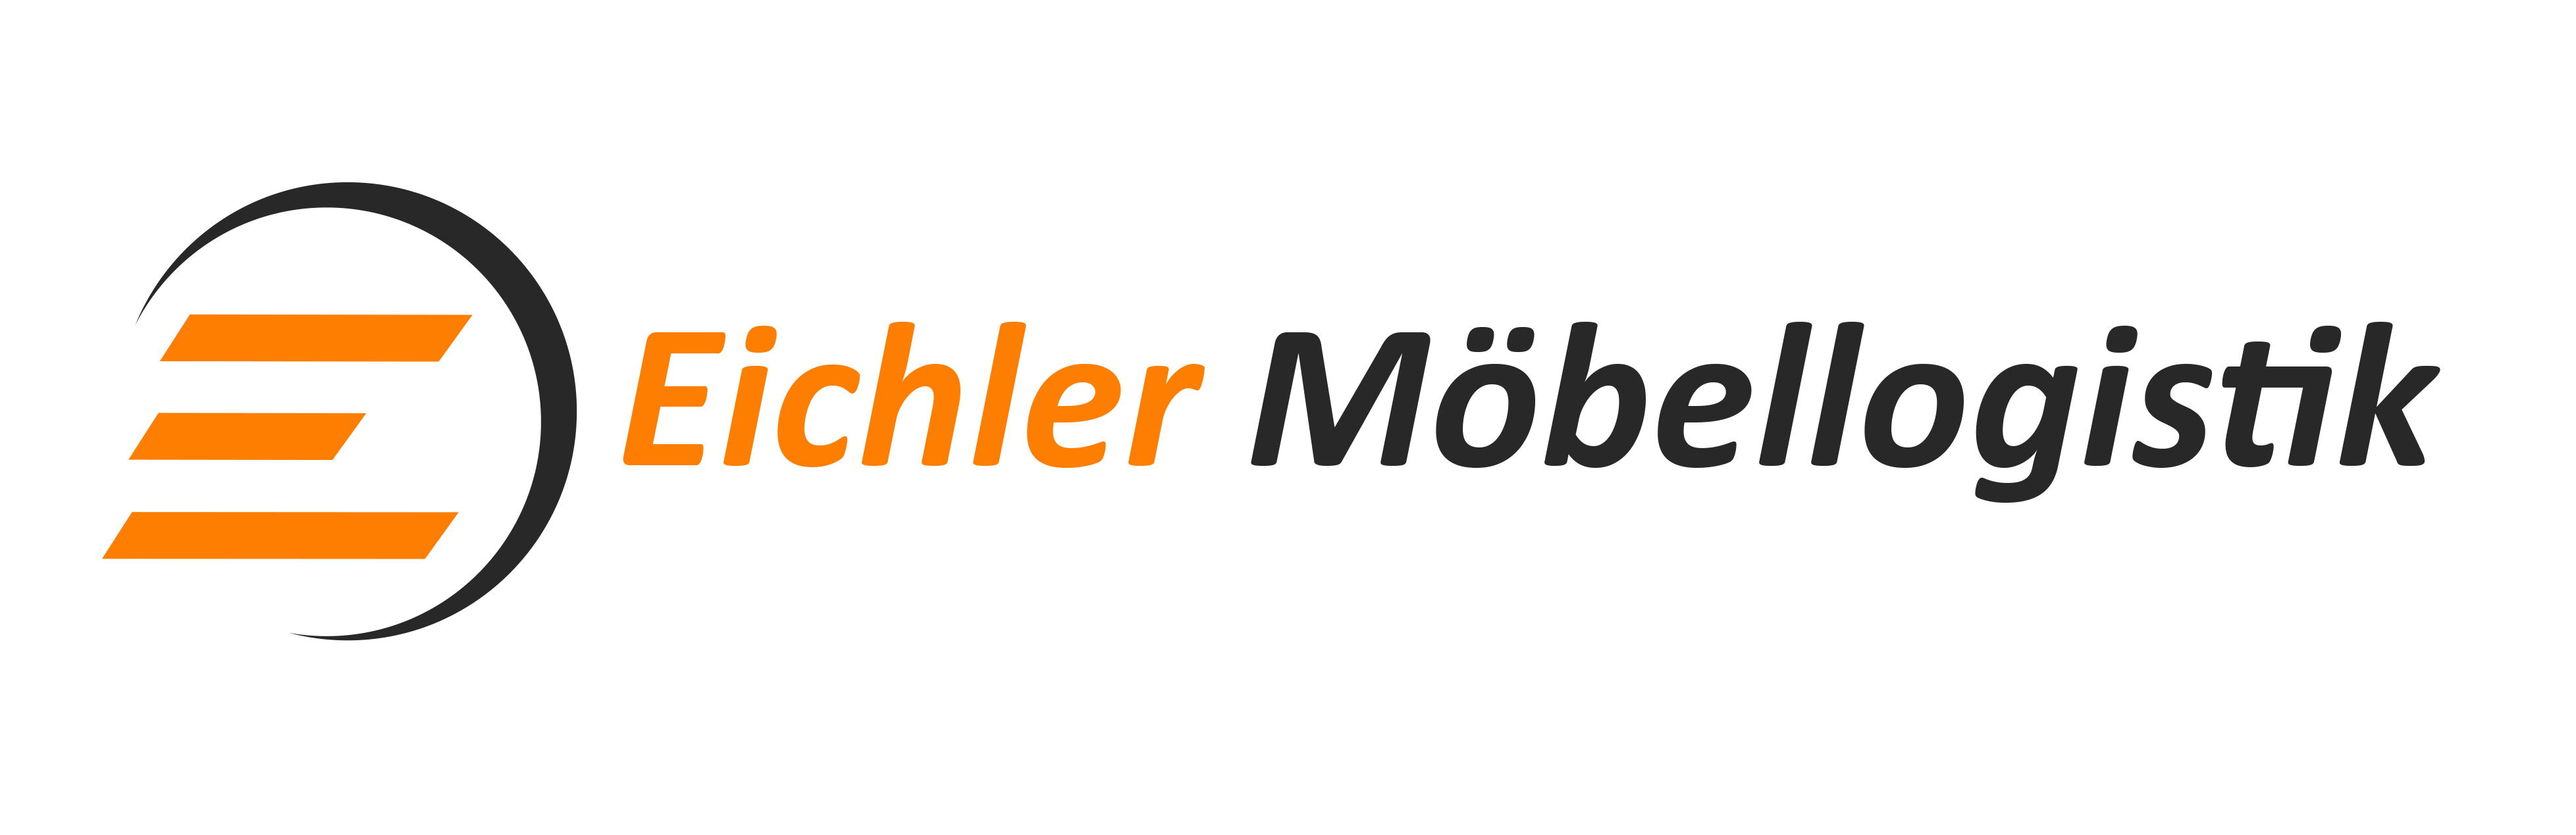 Bild 1 Eichler Möbellogistik GmbH in Neuötting